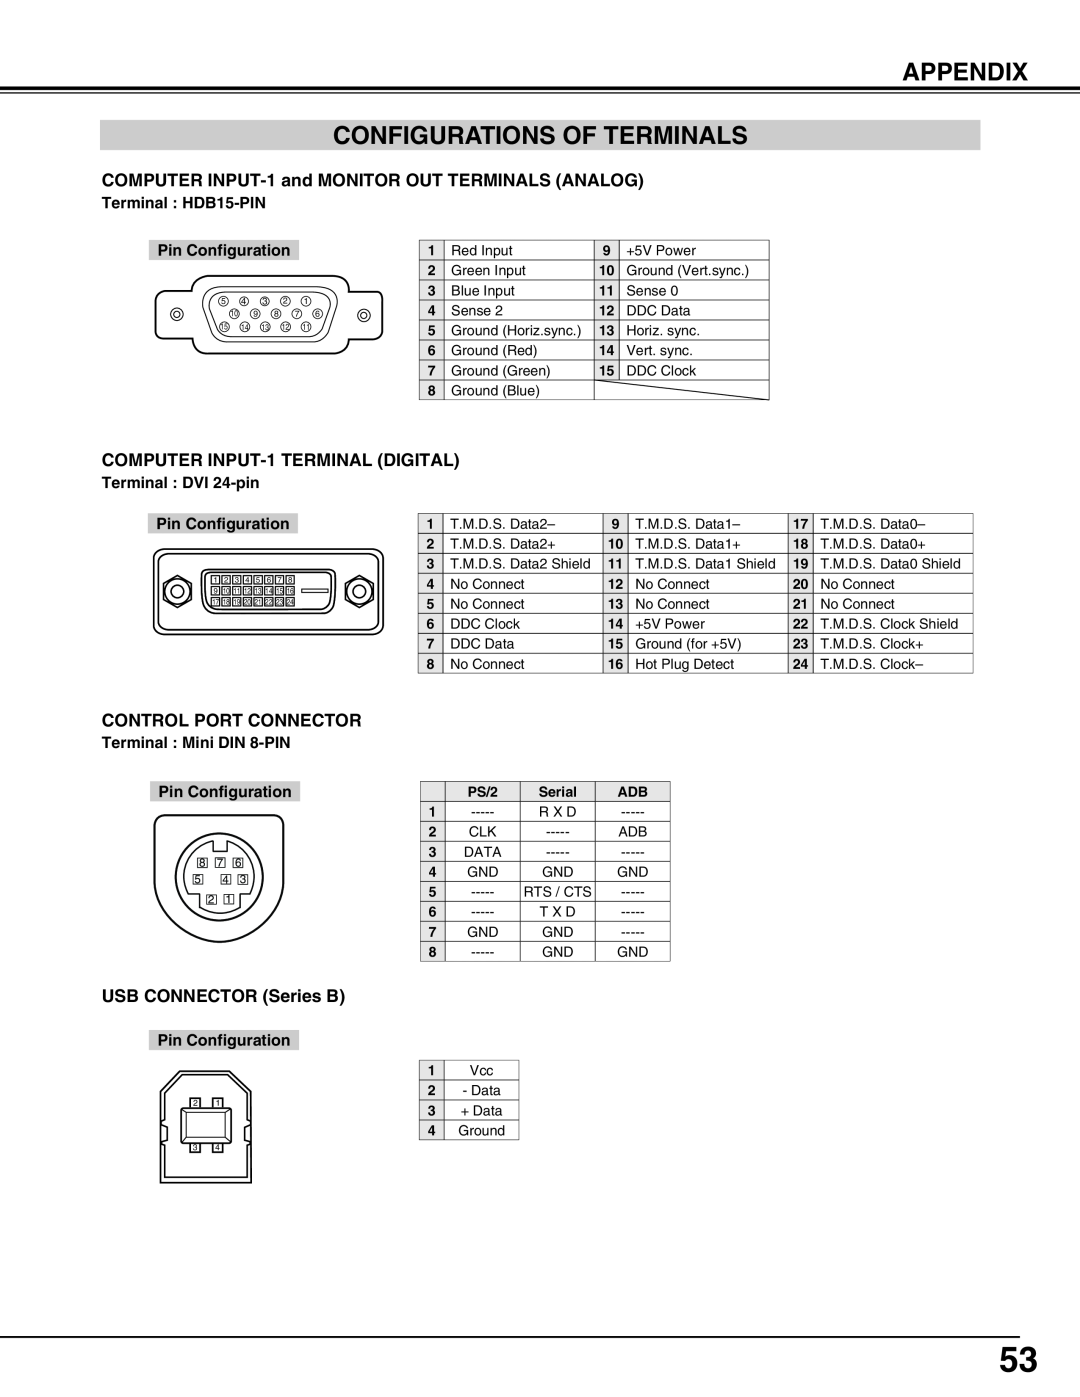 Eiki LC-X70 Appendix Configurations Of Terminals, Terminal HDB15-PIN, Pin Configuration, Terminal DVI 24-pin 